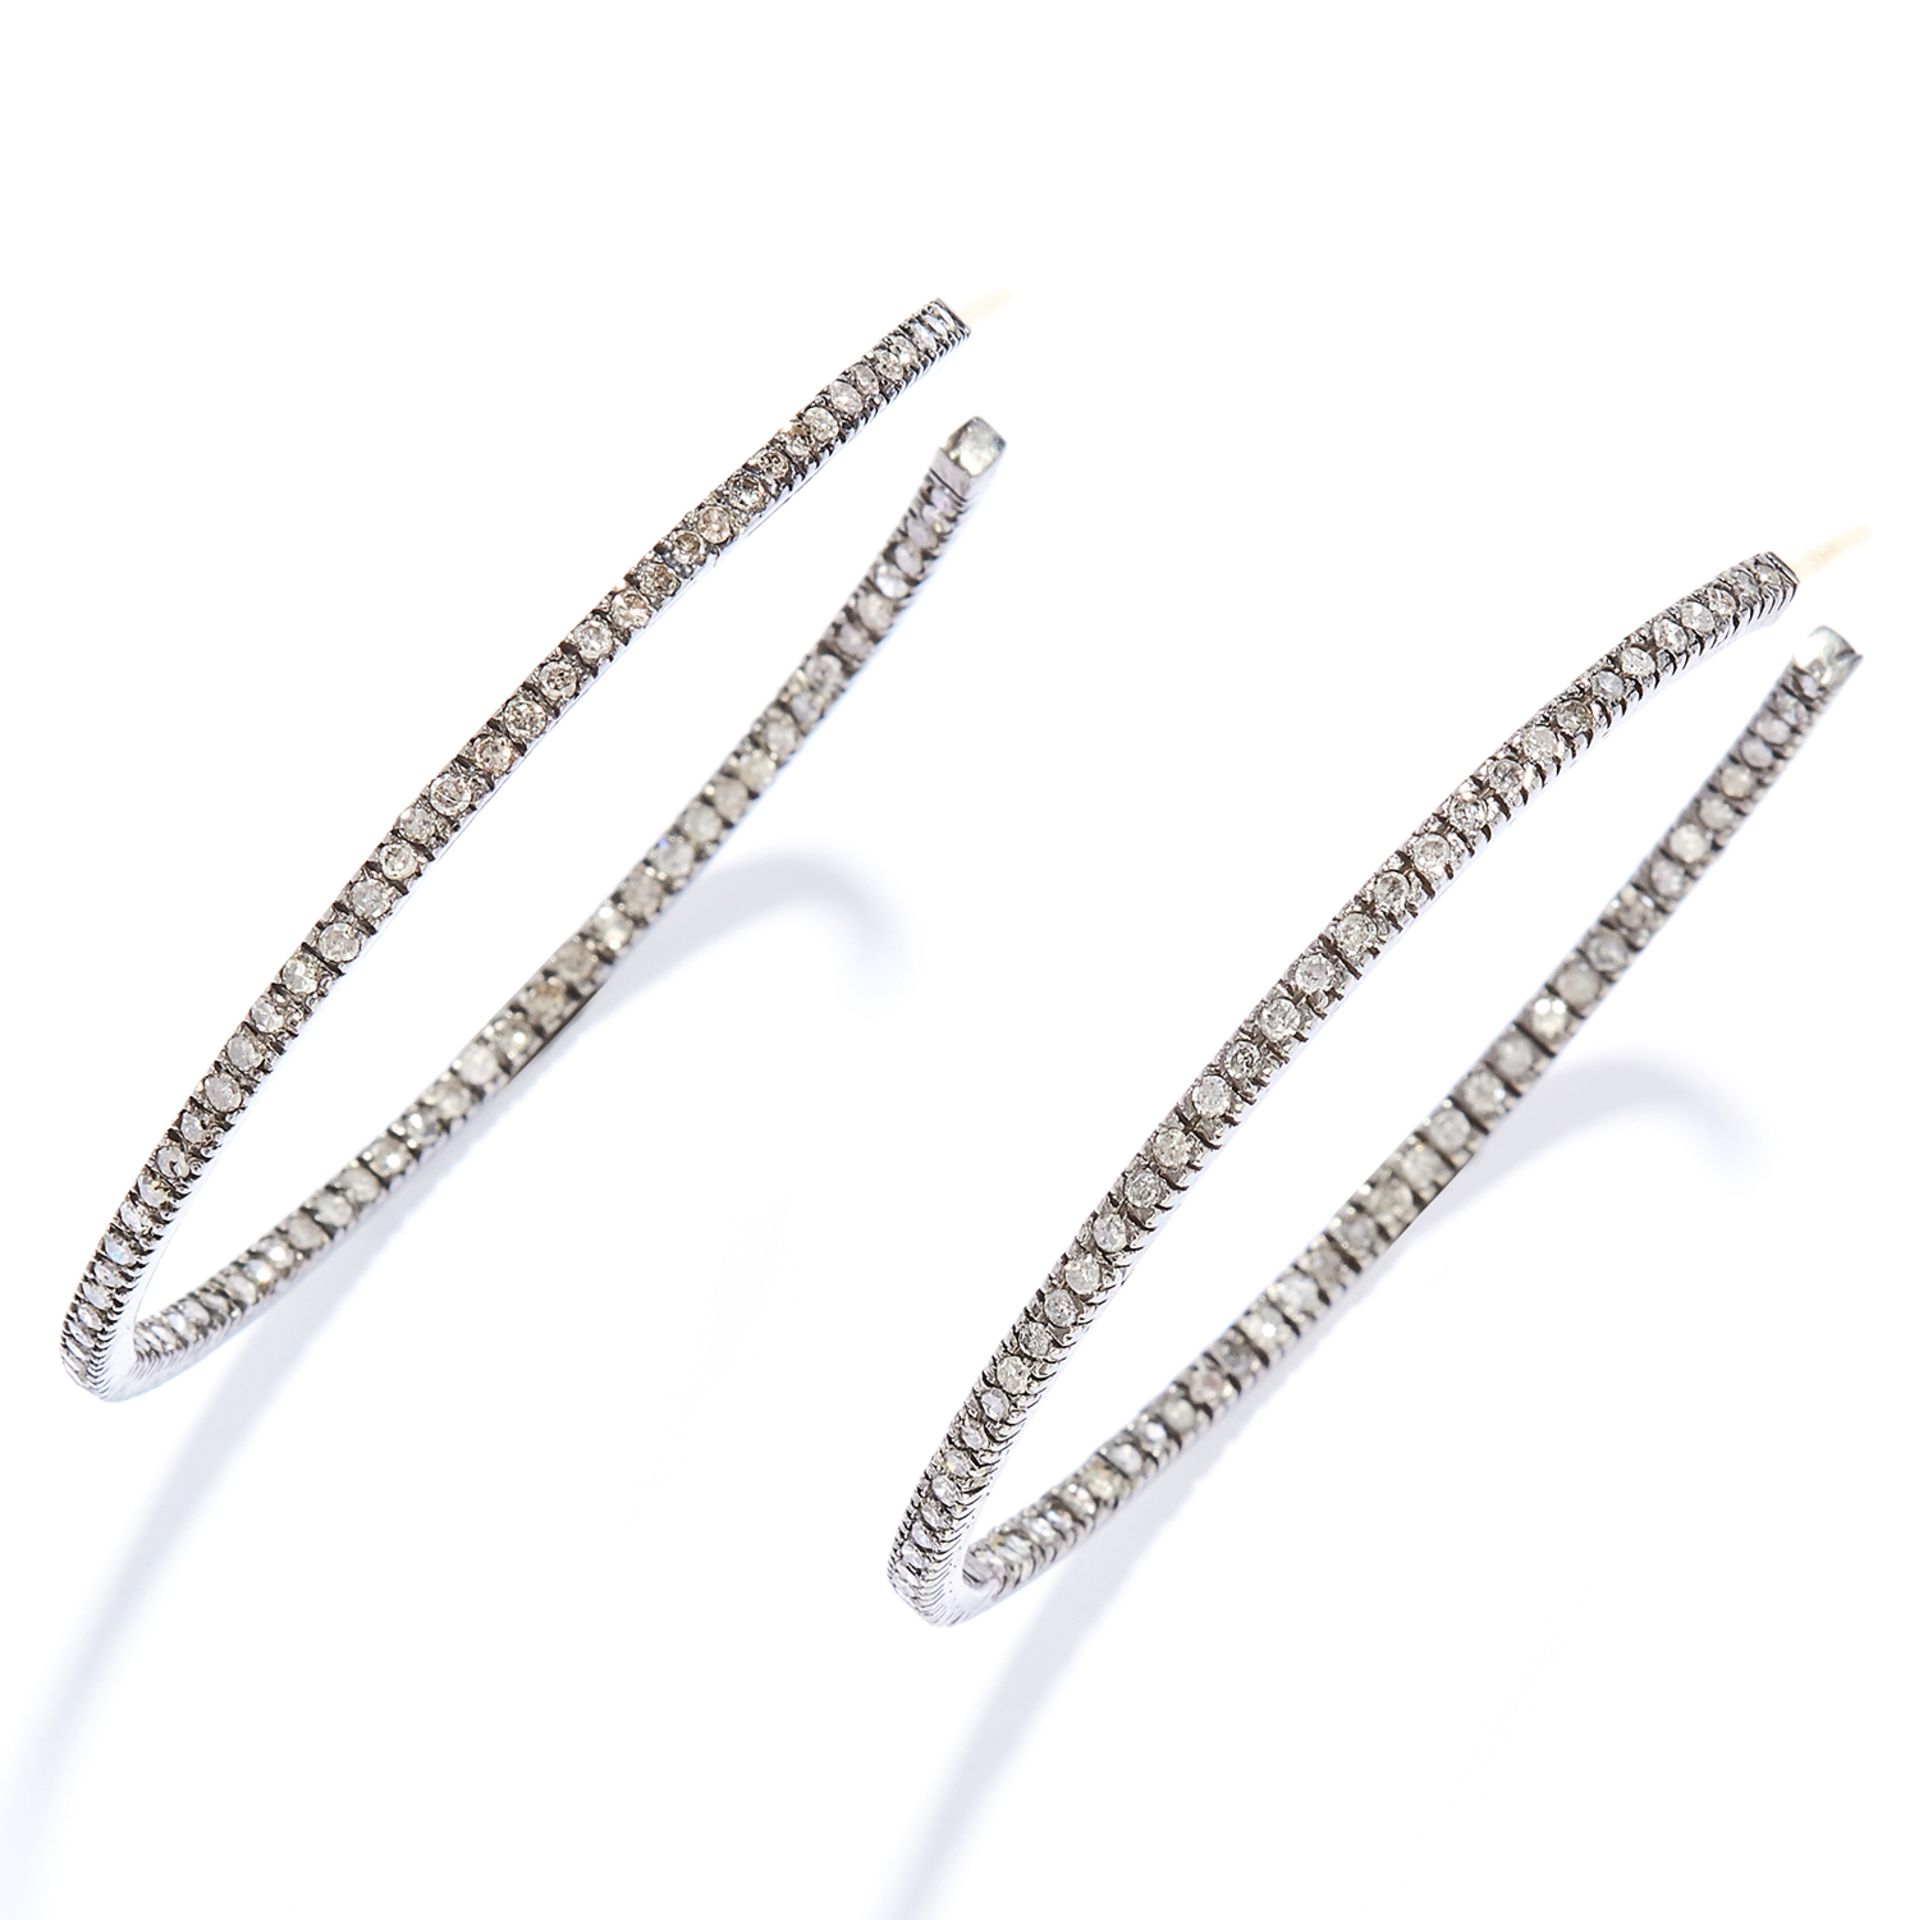 DIAMOND HOOP EARRINGS in white metal, set with round cut diamonds, unmarked, 5cm, 9.3g.